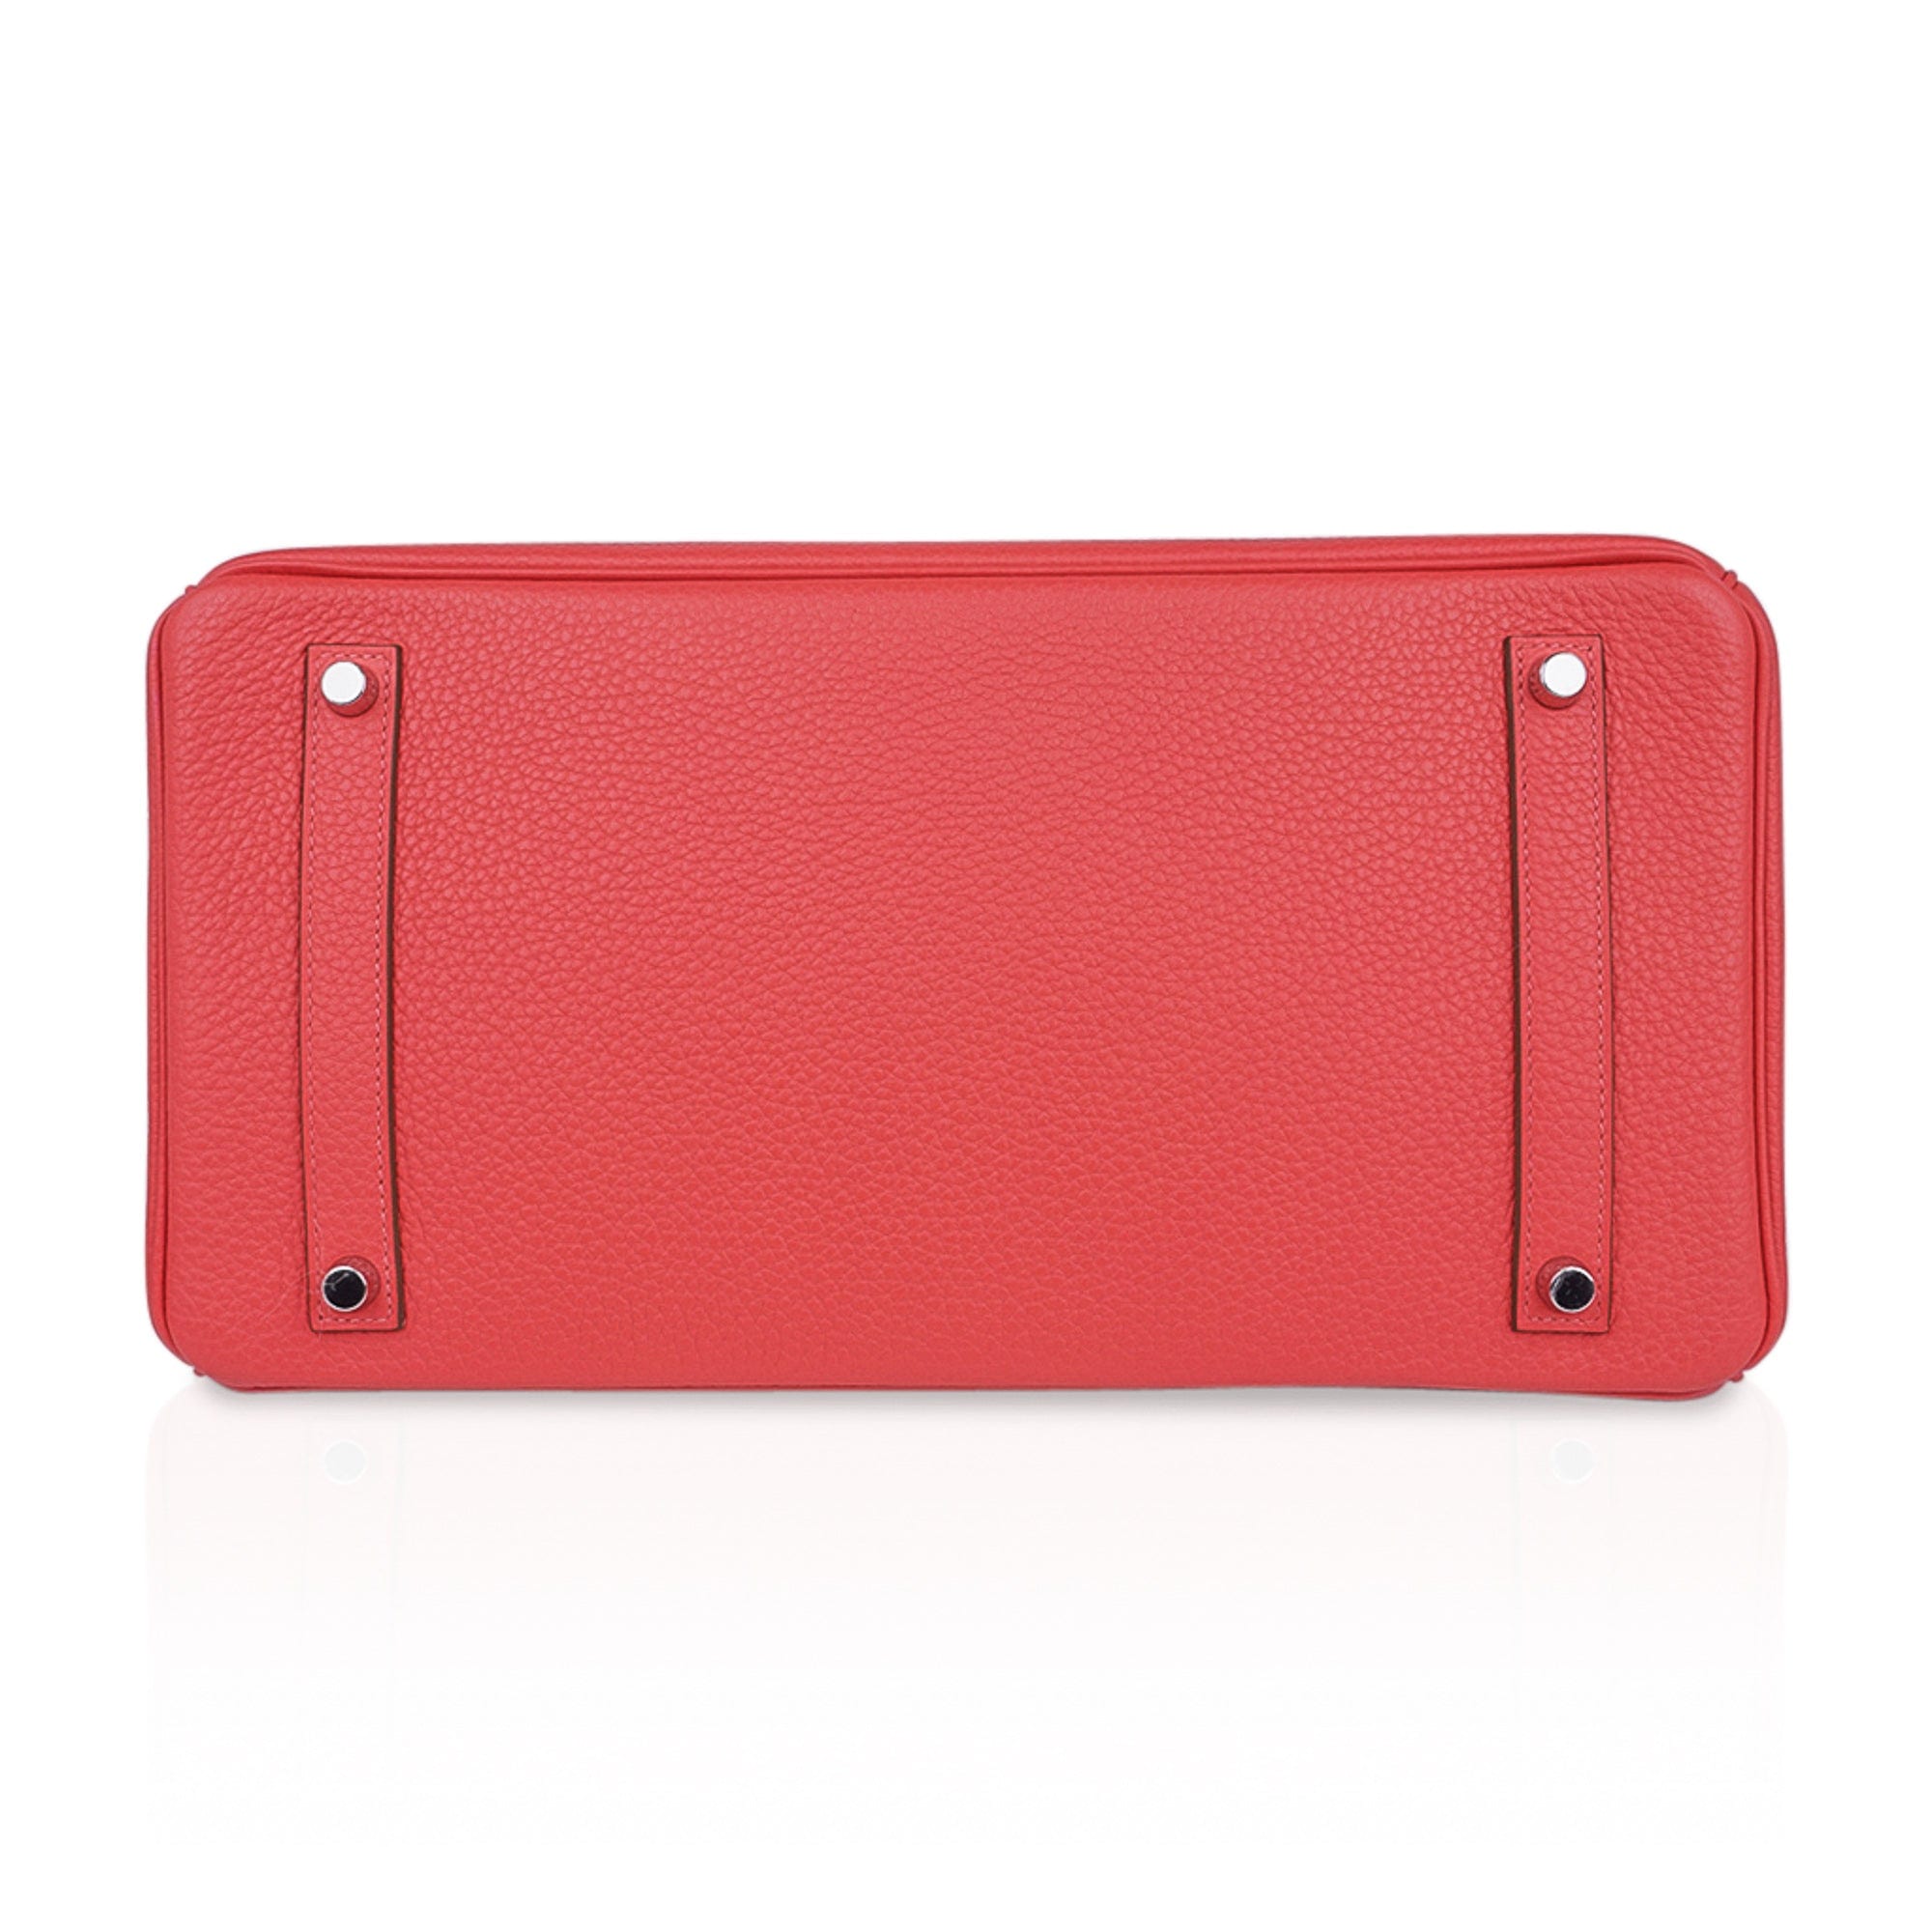 Hermes Limited Edition Tri-color 35cm Rose Jaipur Clemence Leather,, Lot  #64122